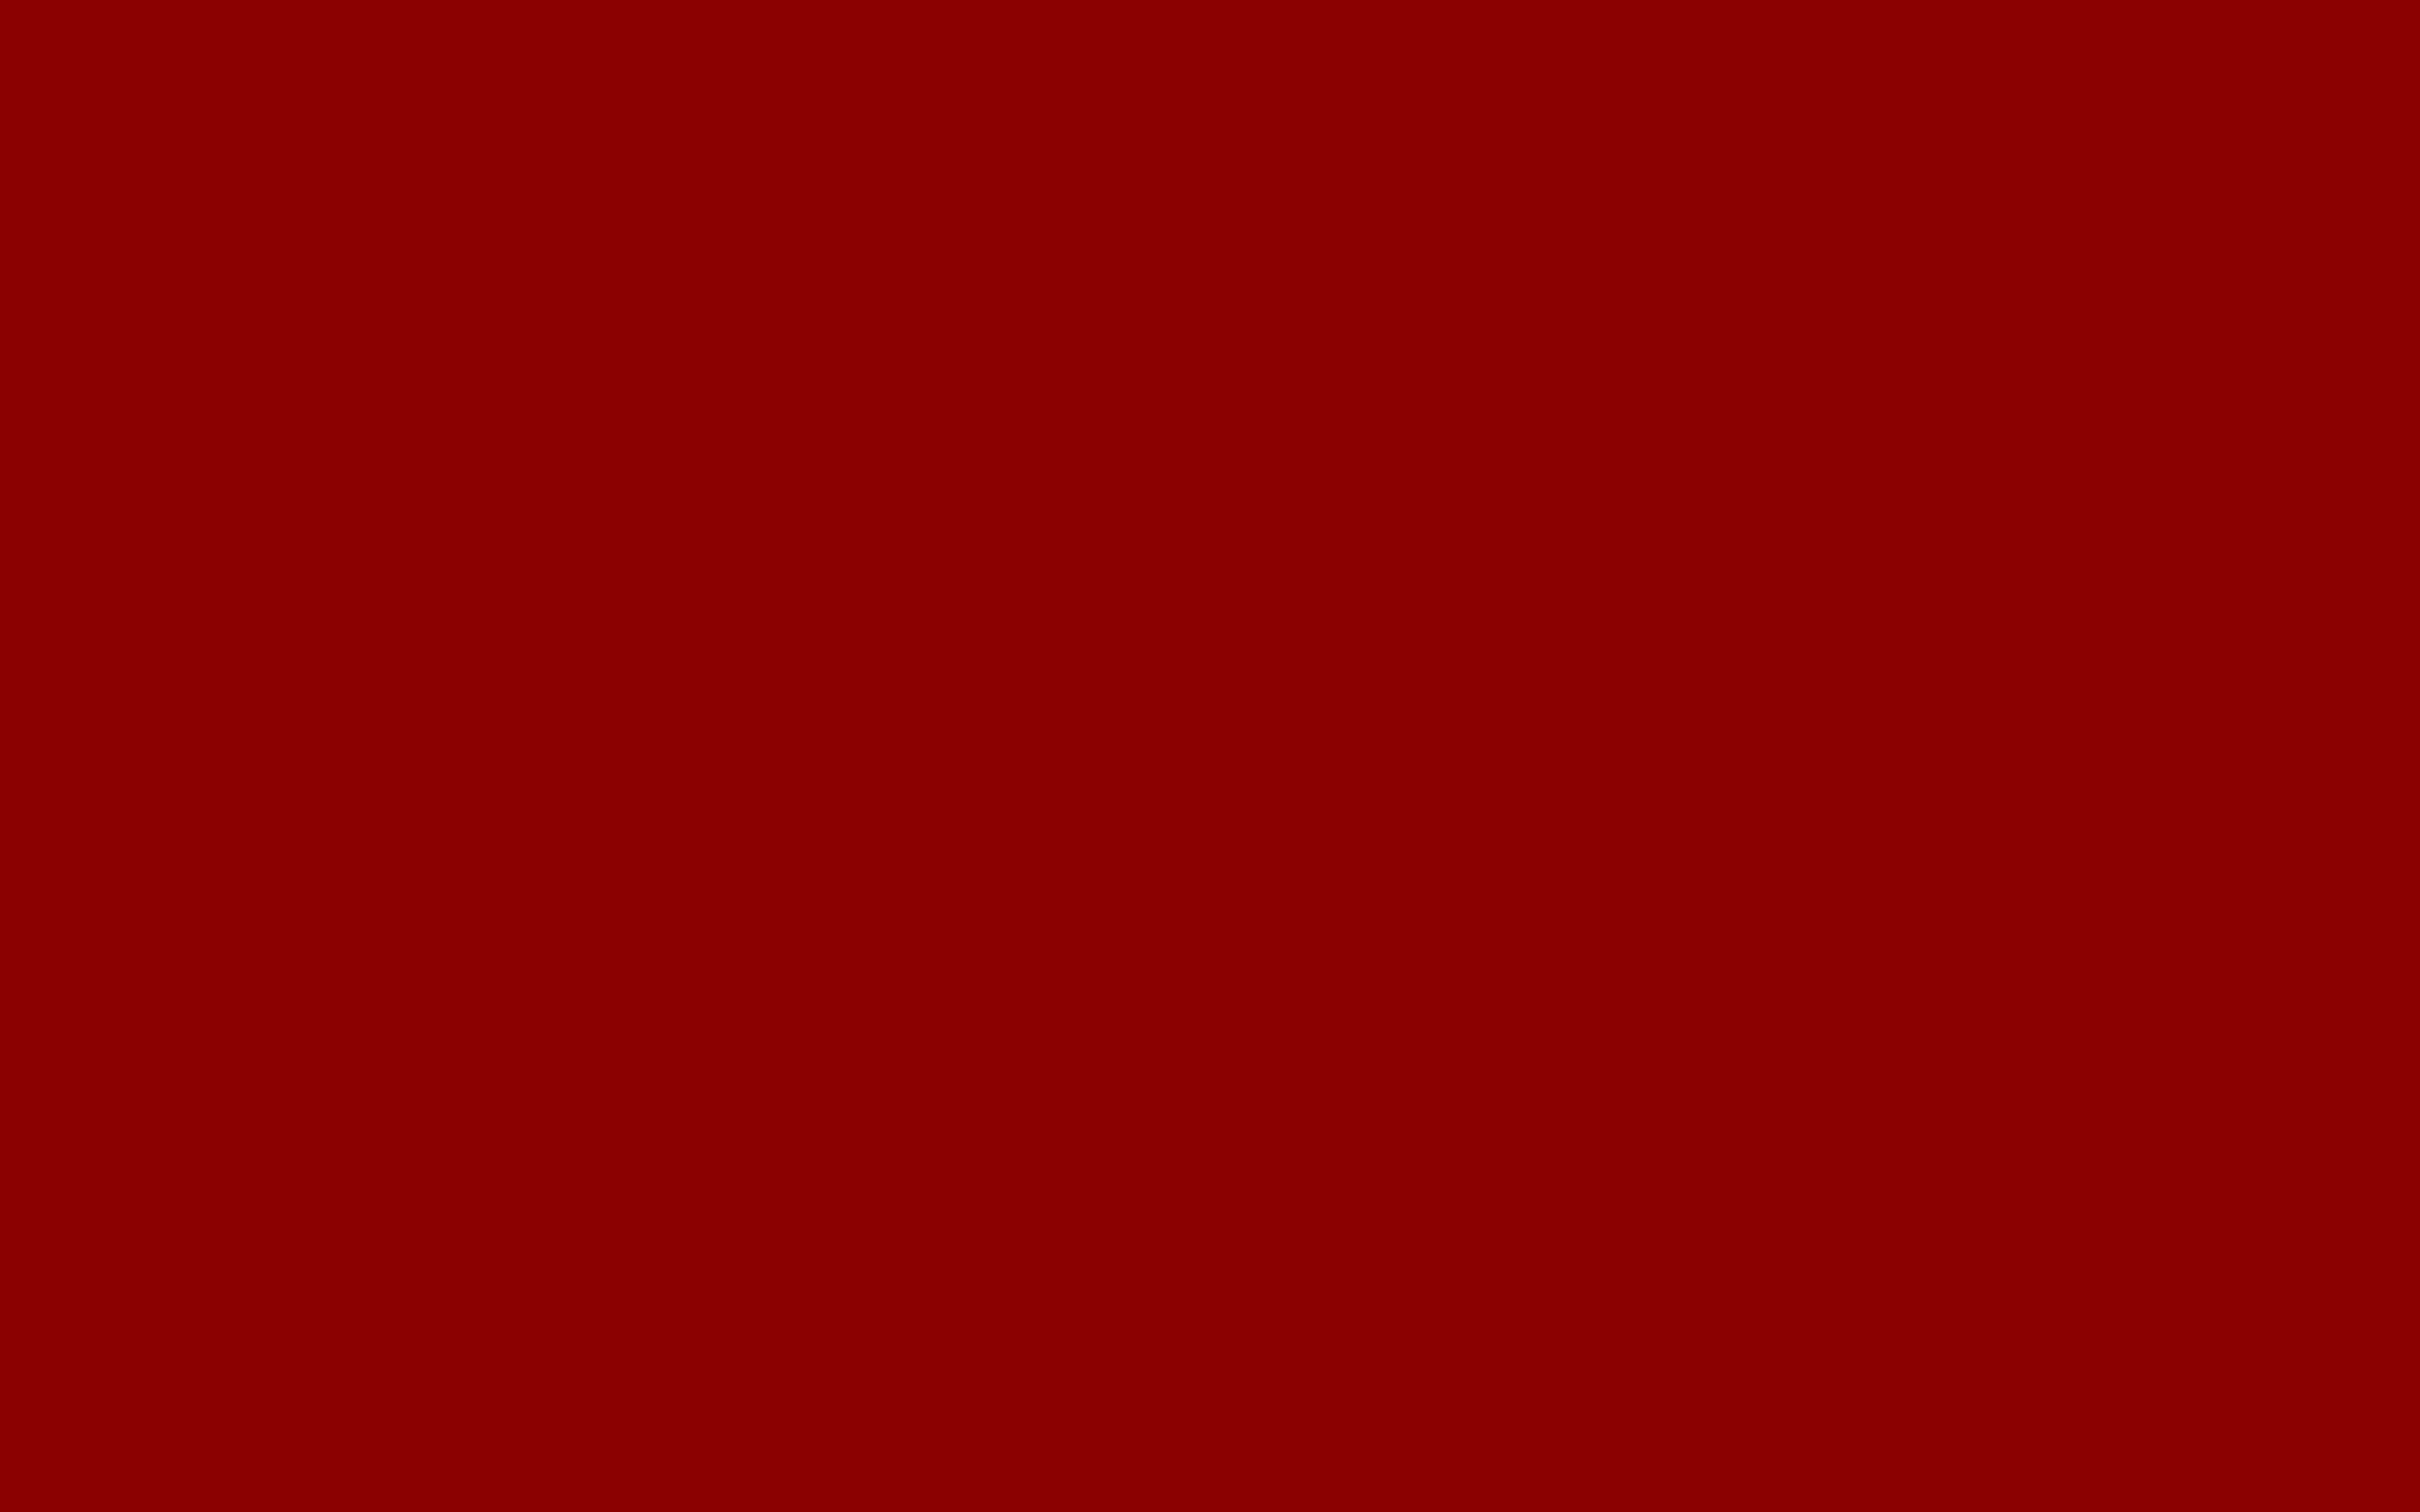 Dark Red Solid Color Background. Jason P J1 16